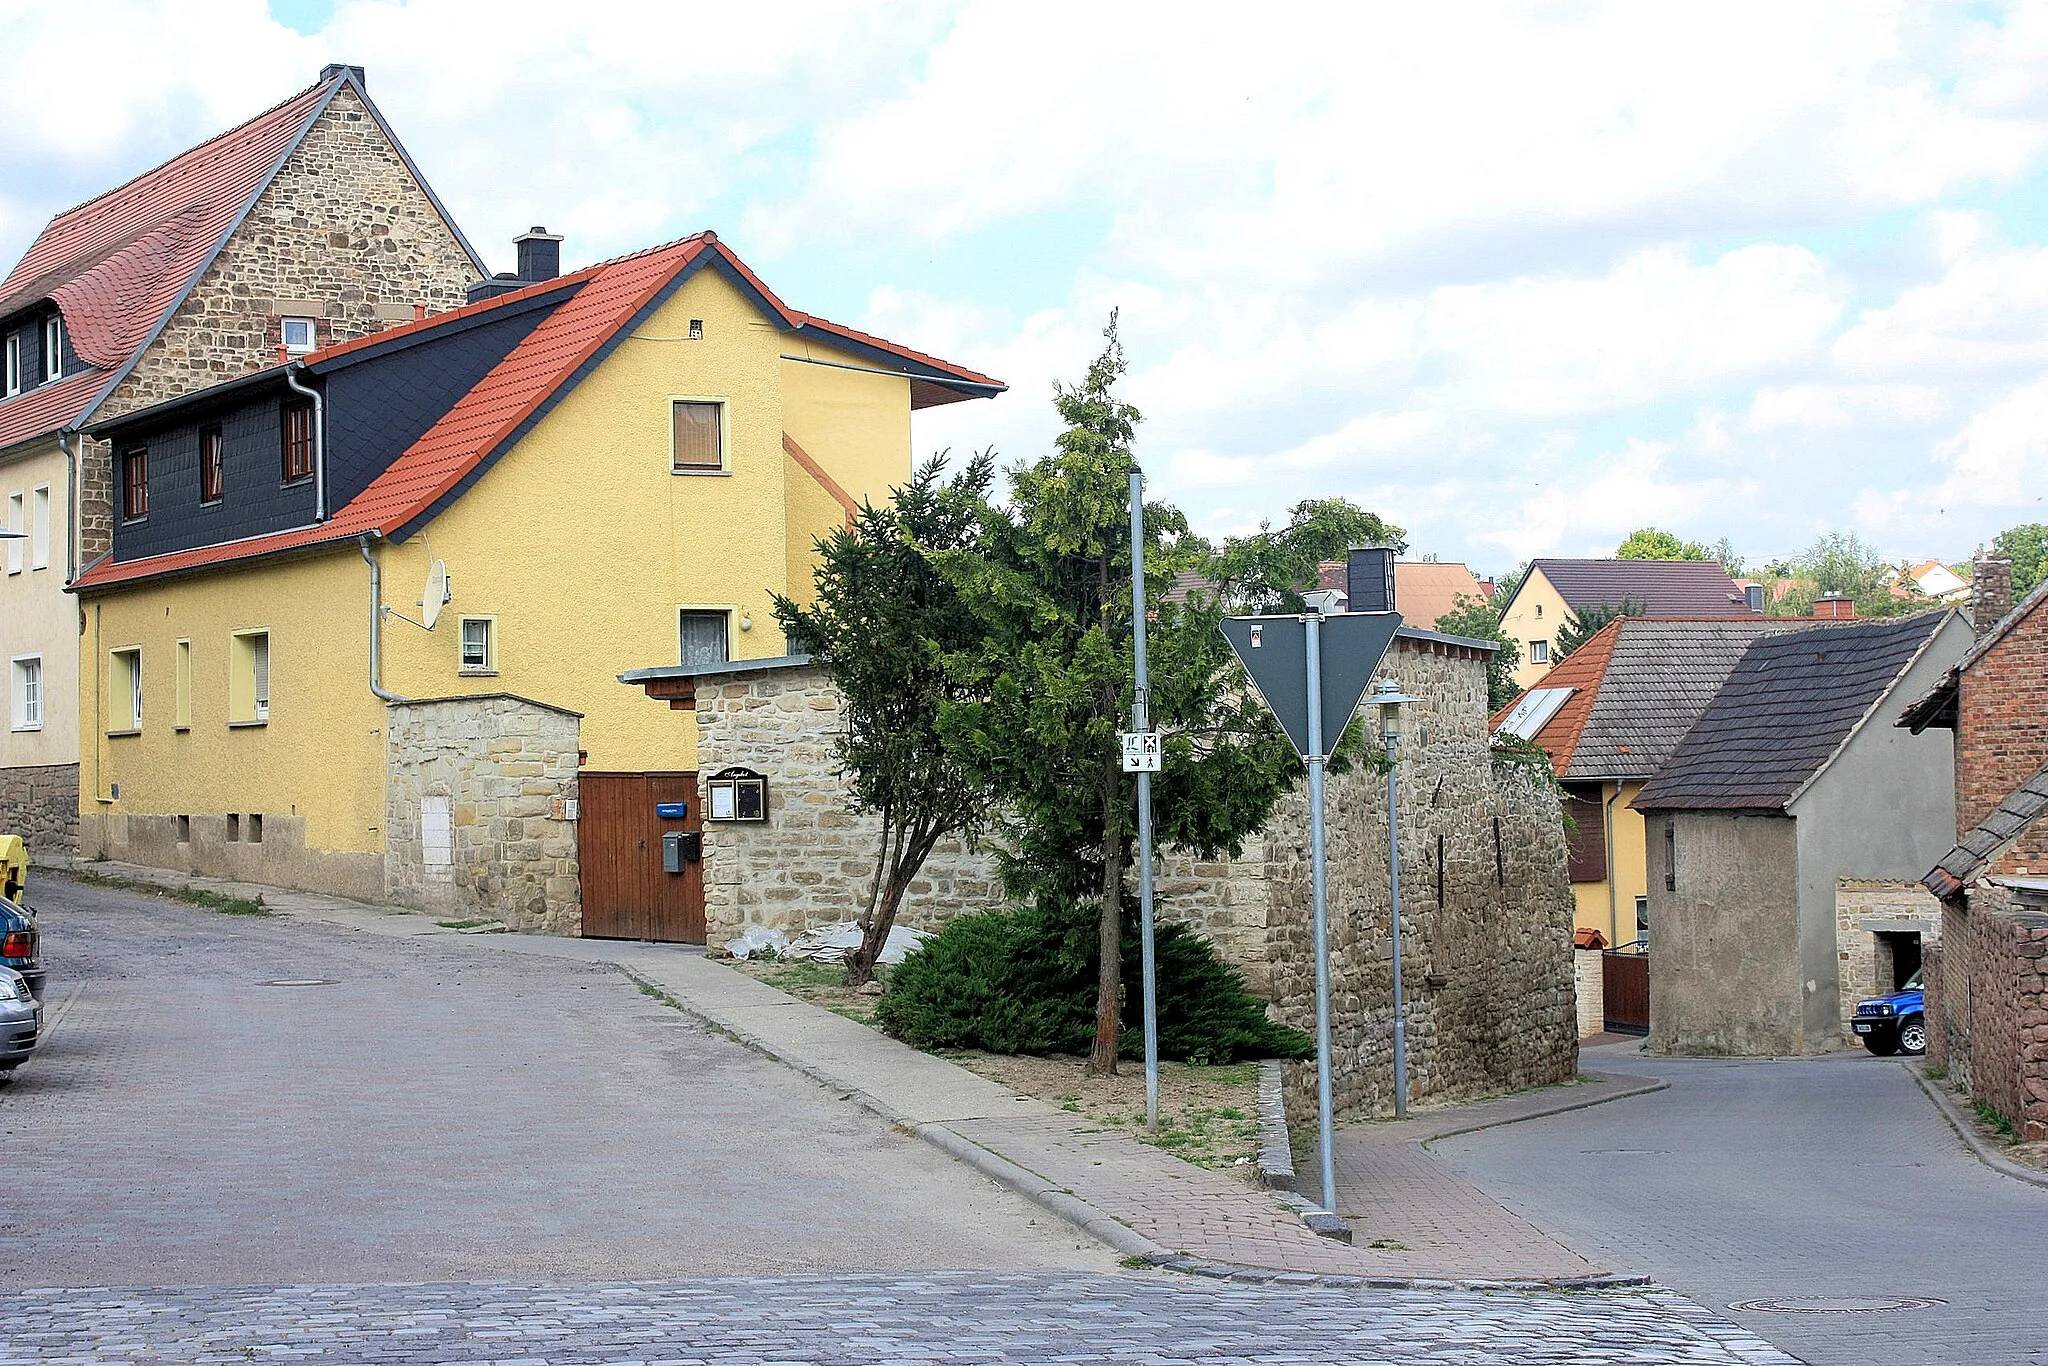 Photo showing: Höhnstedt (Salzatal), villagescape